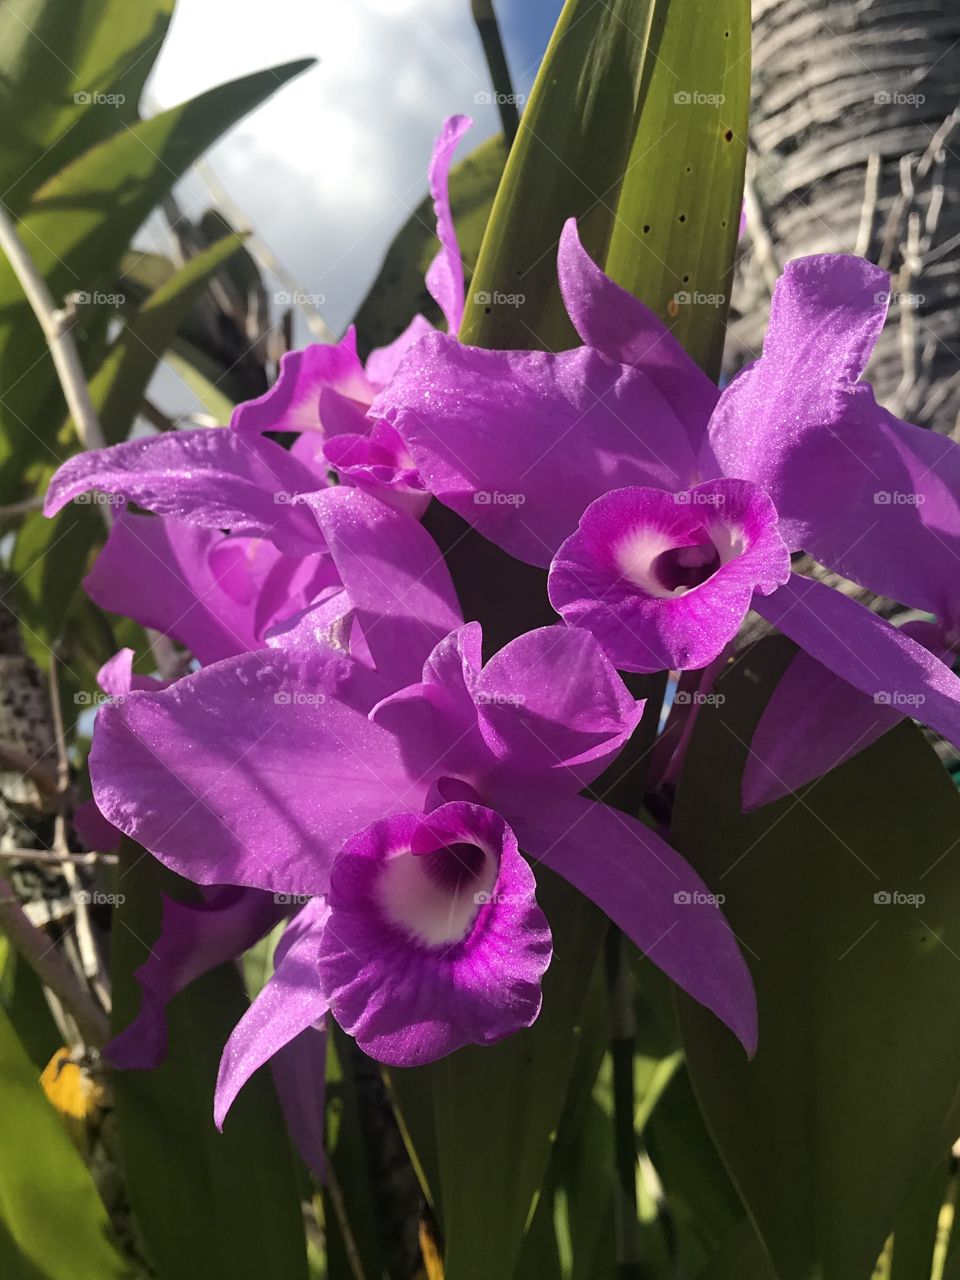 Orchid plants home decor lawn outdoor garden 